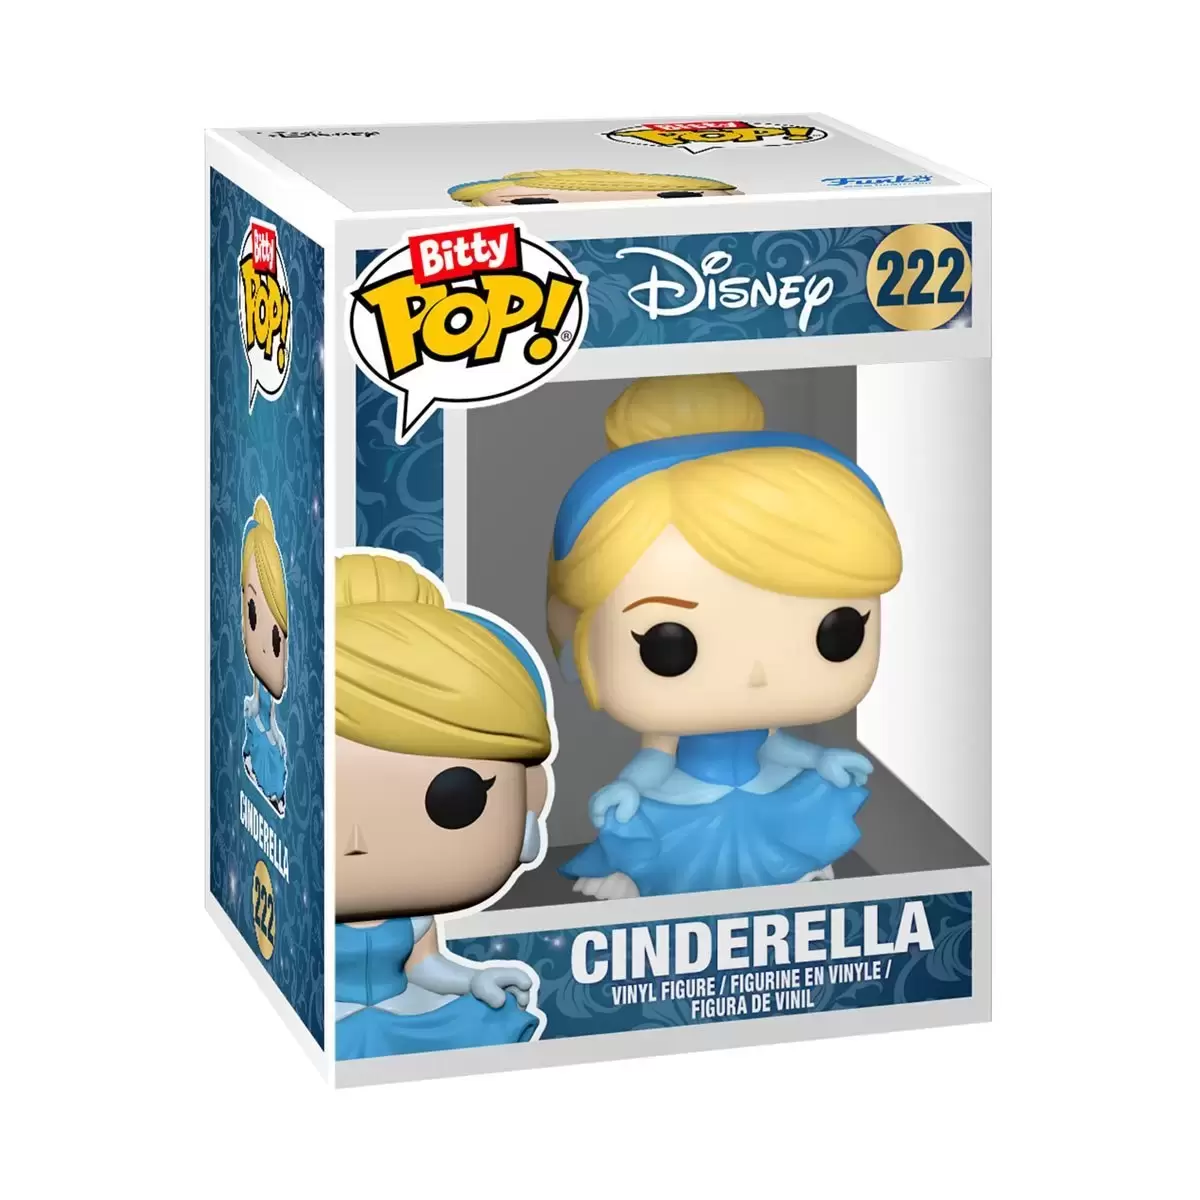 Bitty POP! - Disney Princess - Cinderella